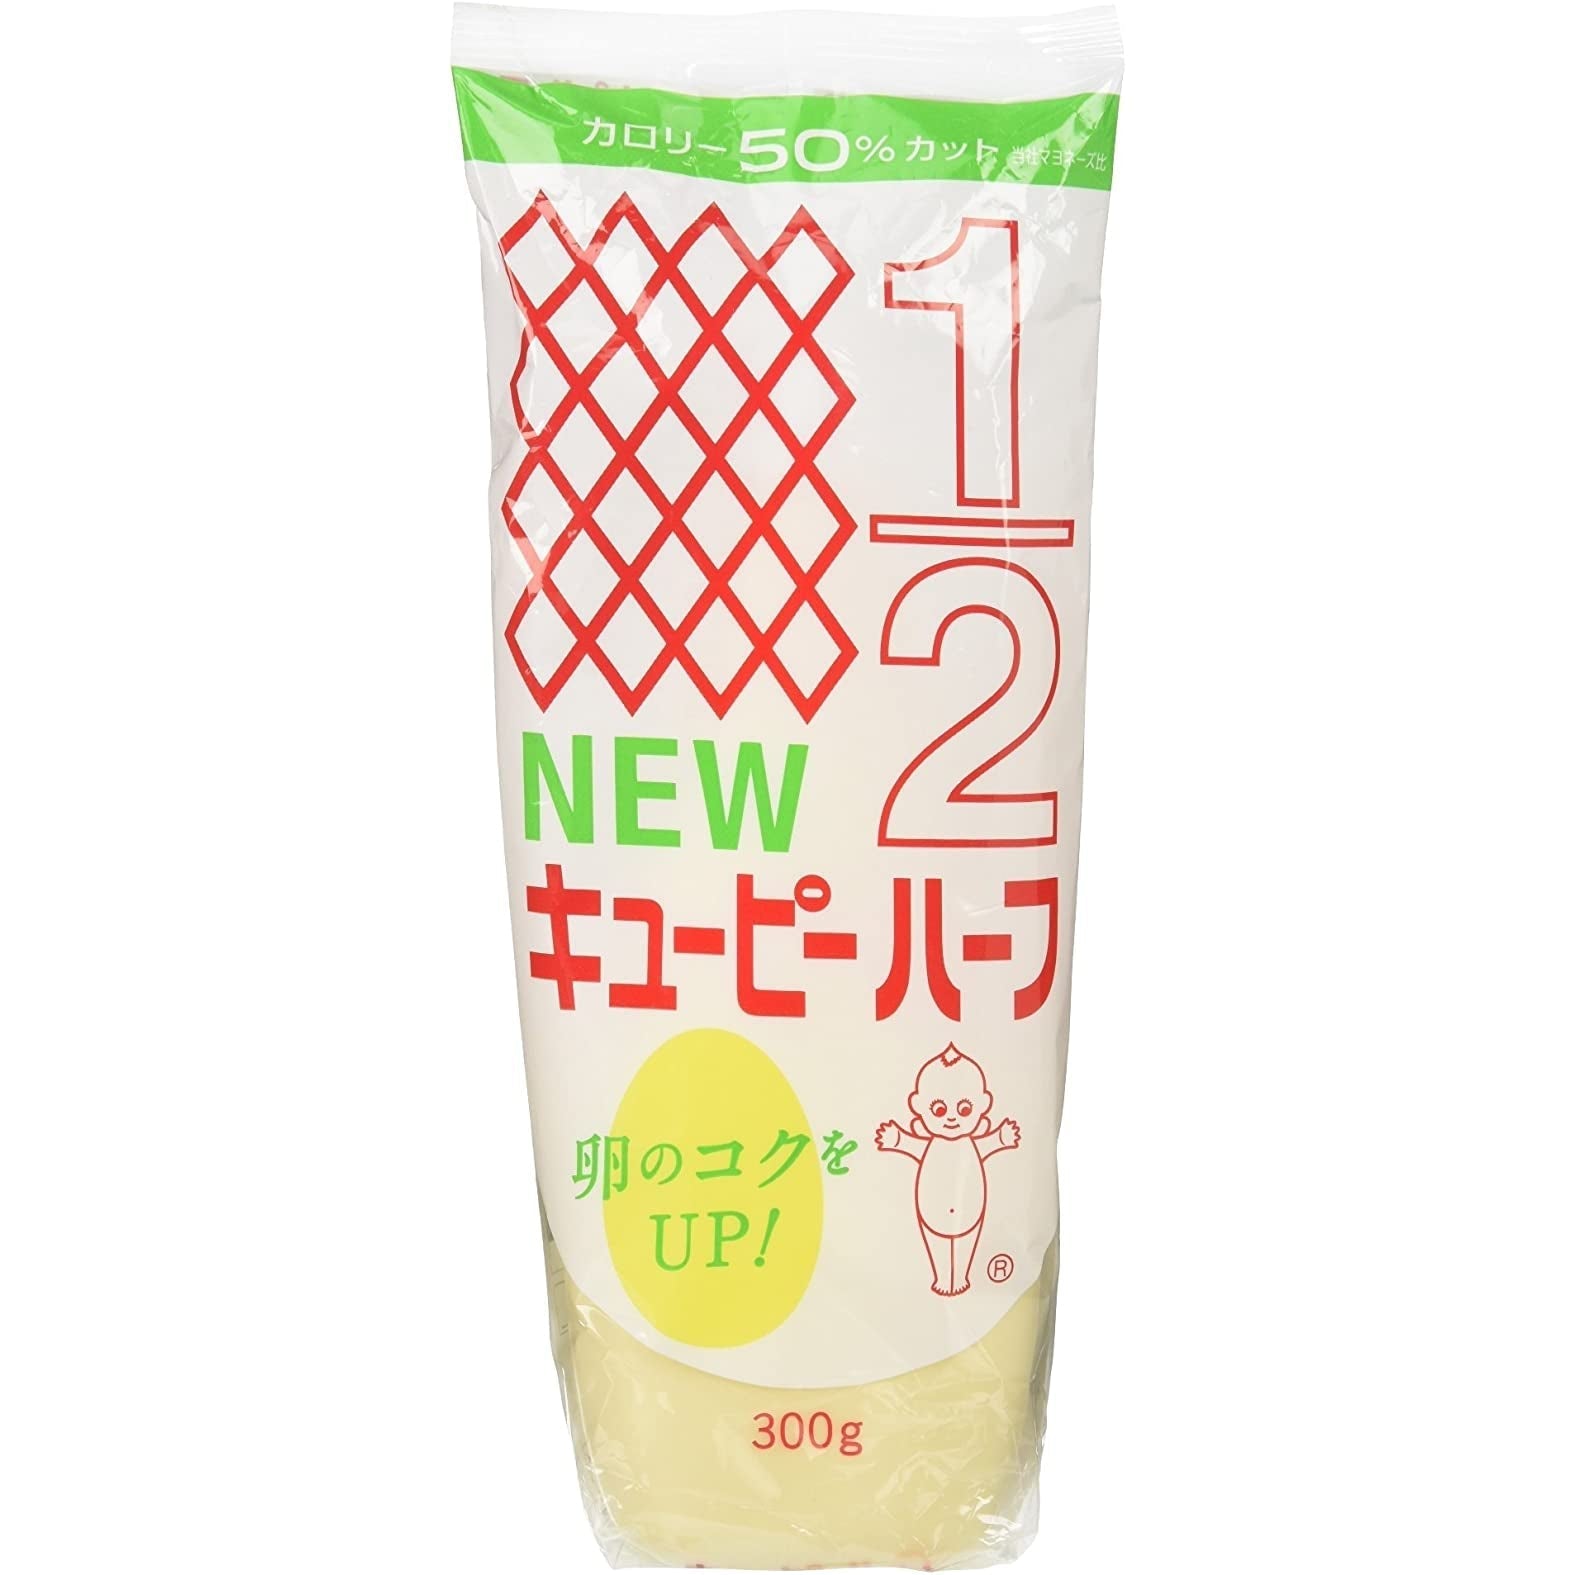 Kewpie Cholesterol Free Mayonnaise Japanese Mayo 310g – Japanese Taste